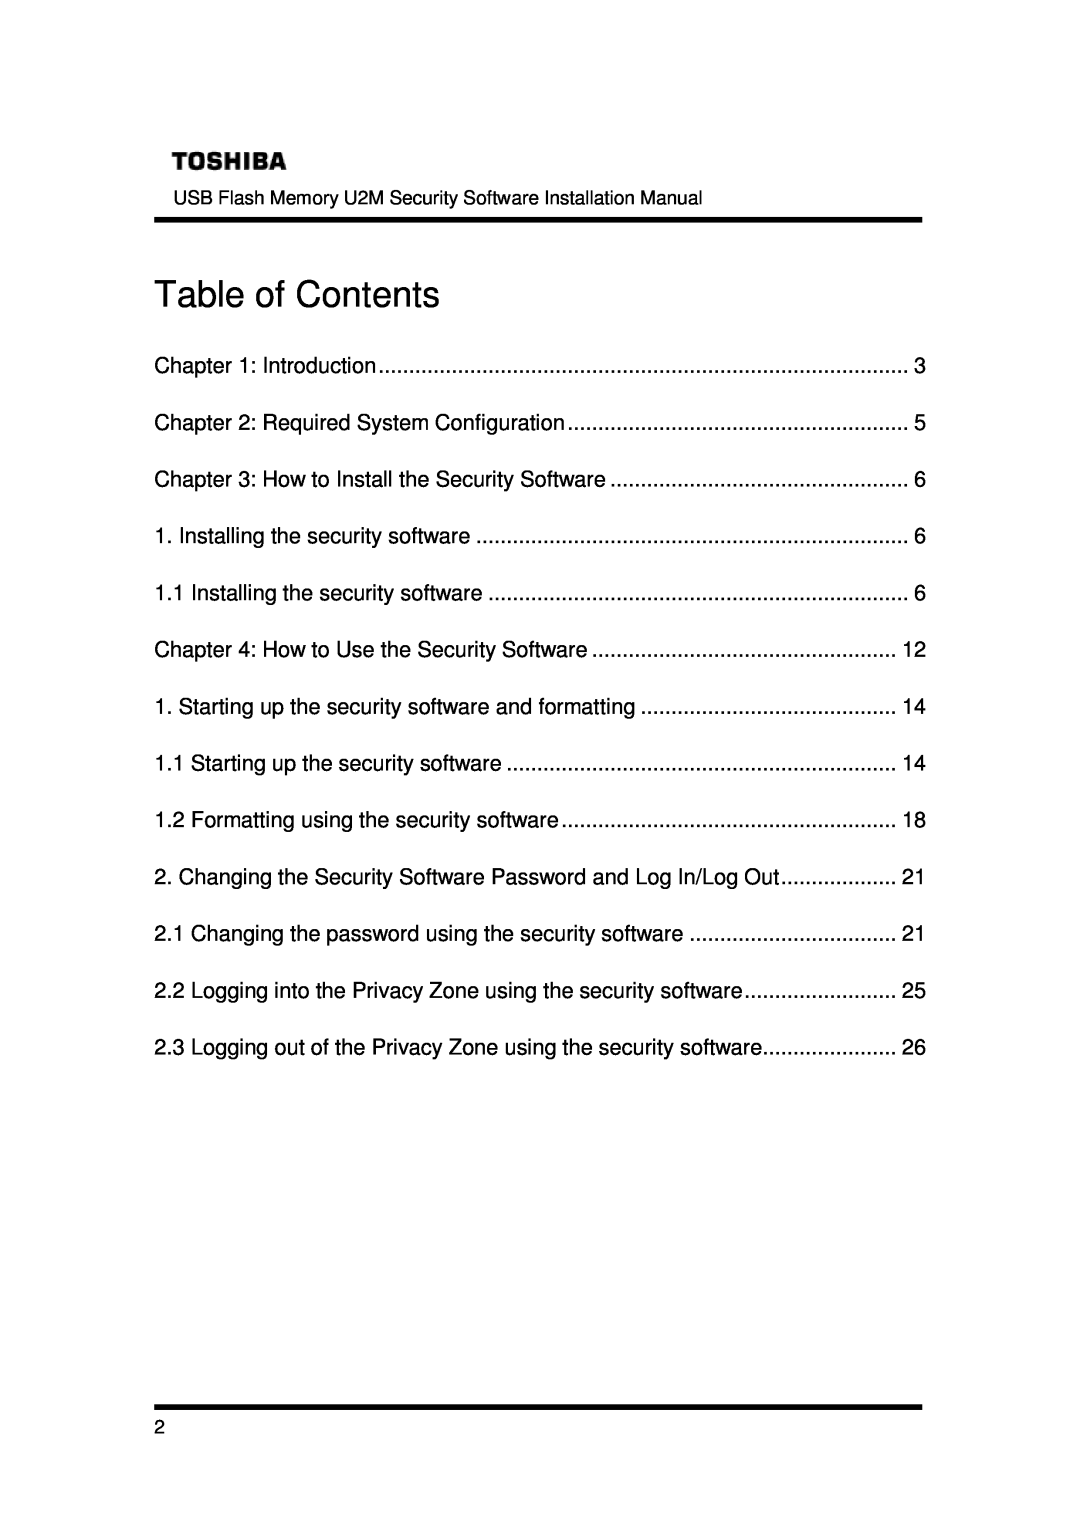 Toshiba U2M-008GT, U2M-016GT, U2M-004GT installation manual Table of Contents 